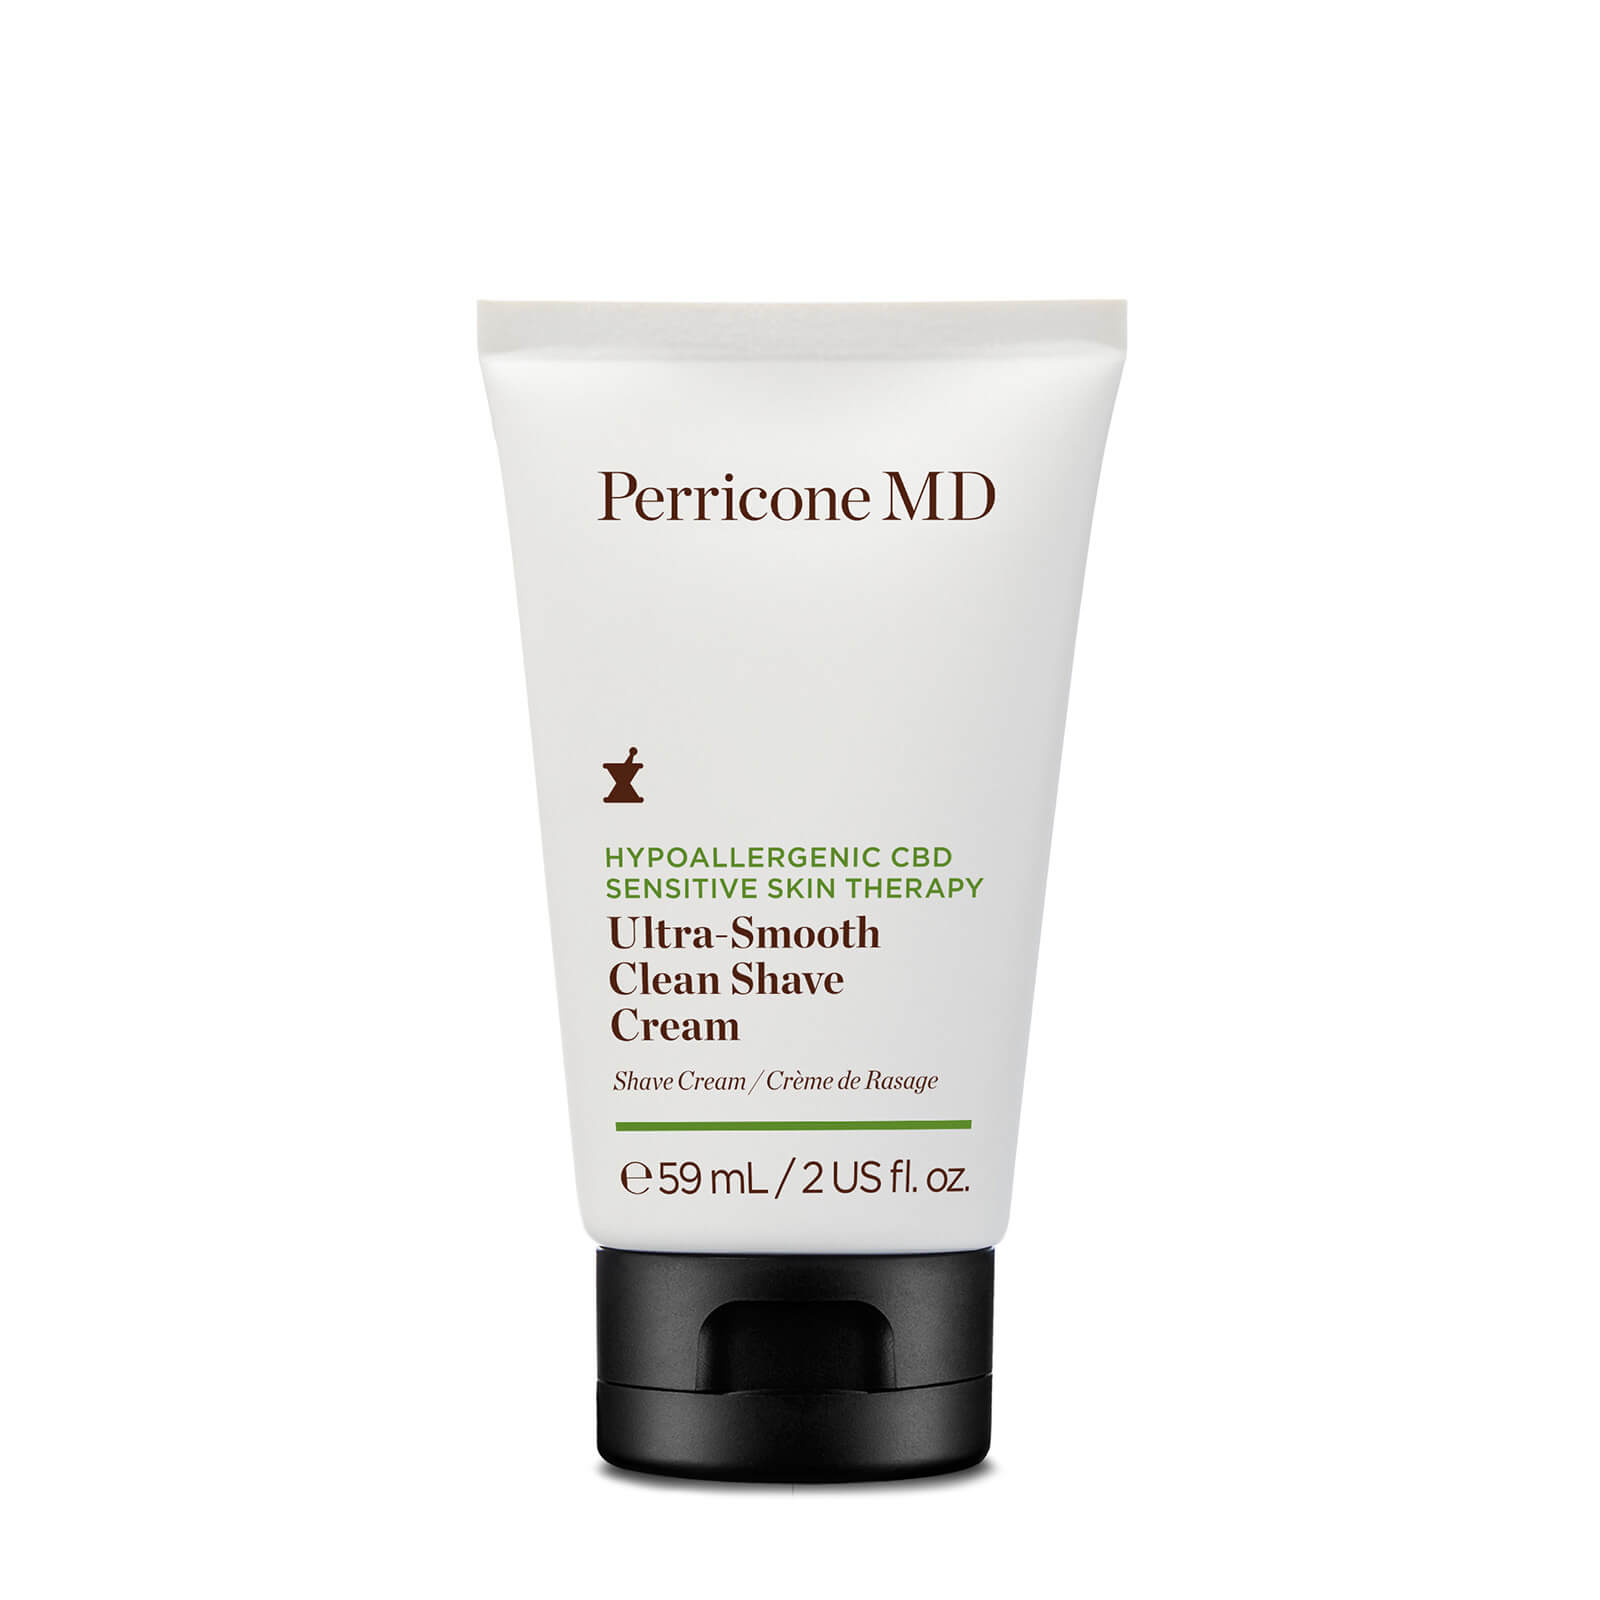 Perricone MD CBD Hypoallergenic Sensitive Skin Therapy Ultra-Smooth Clean Shave Cream 177ml - 2 oz /